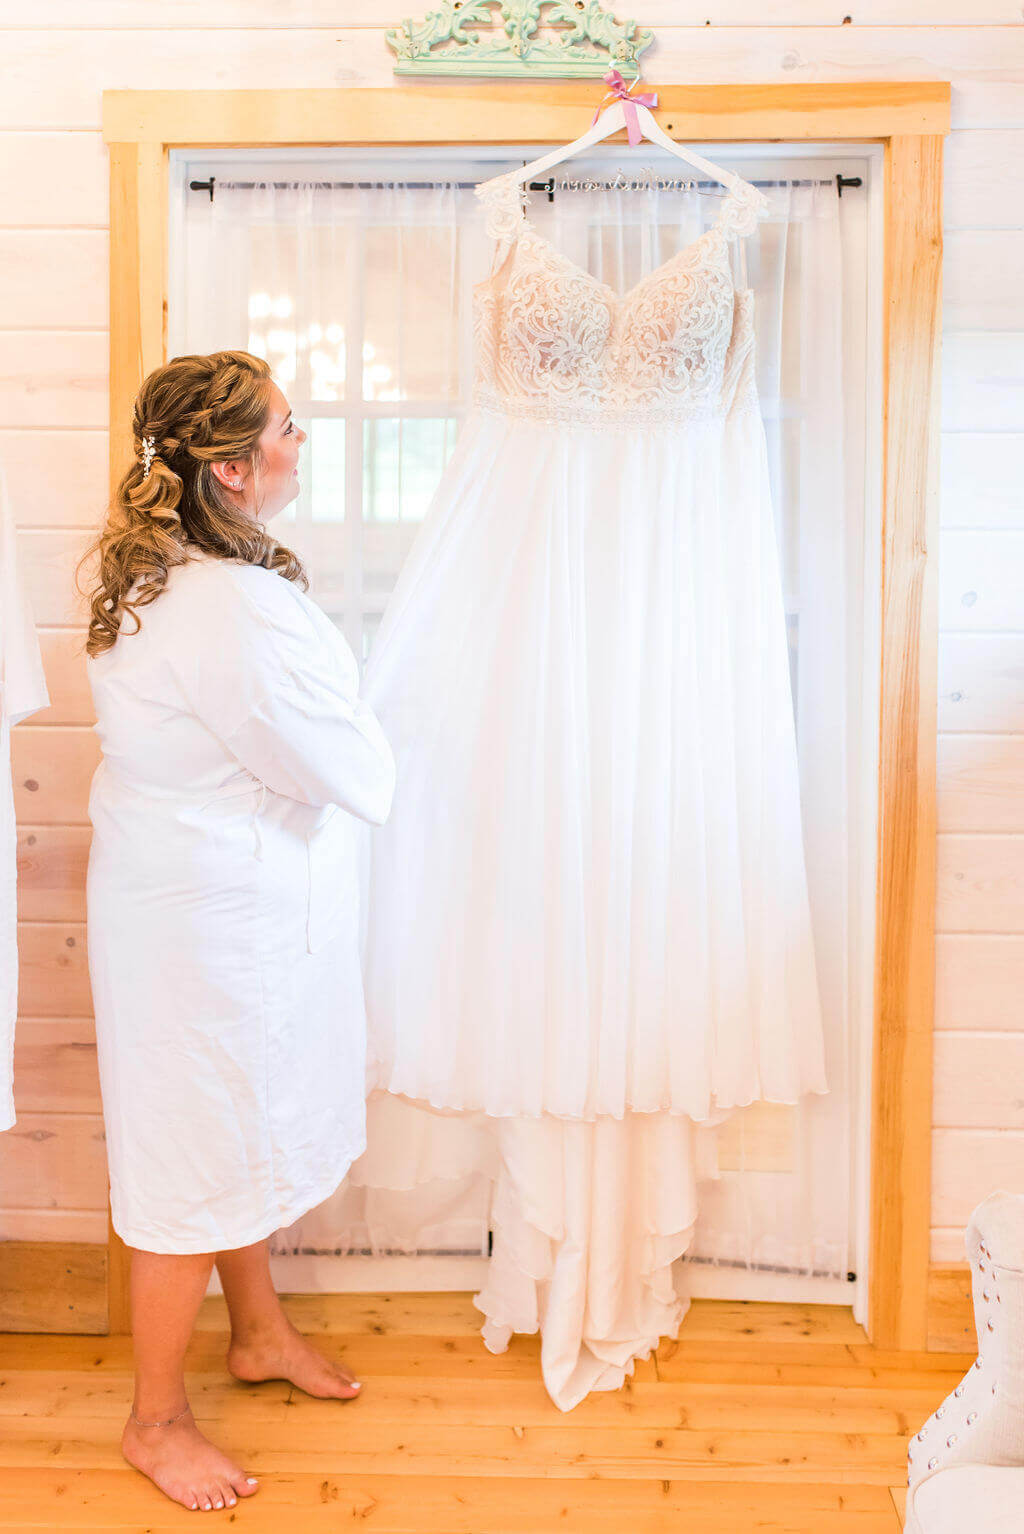 bride looking at her wedding dress